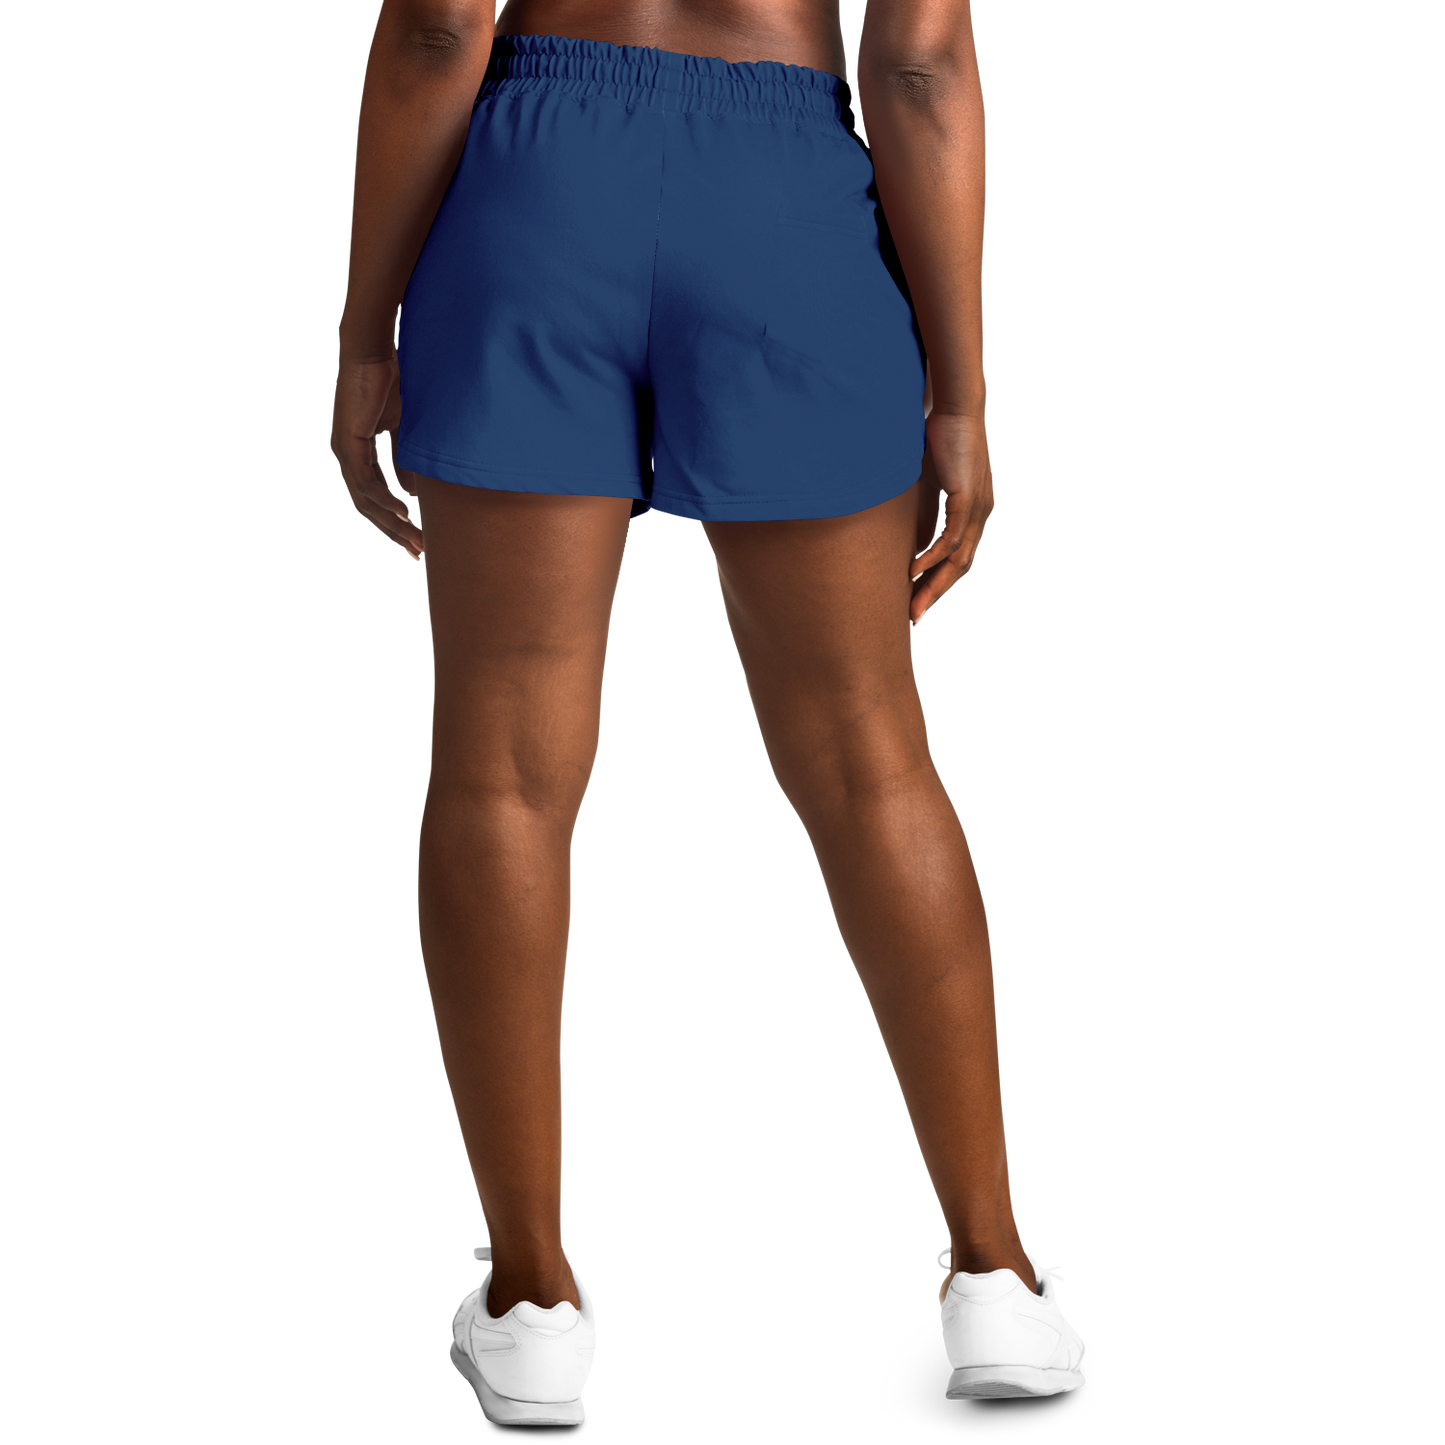 Minneapolis Women's Blue Shorts